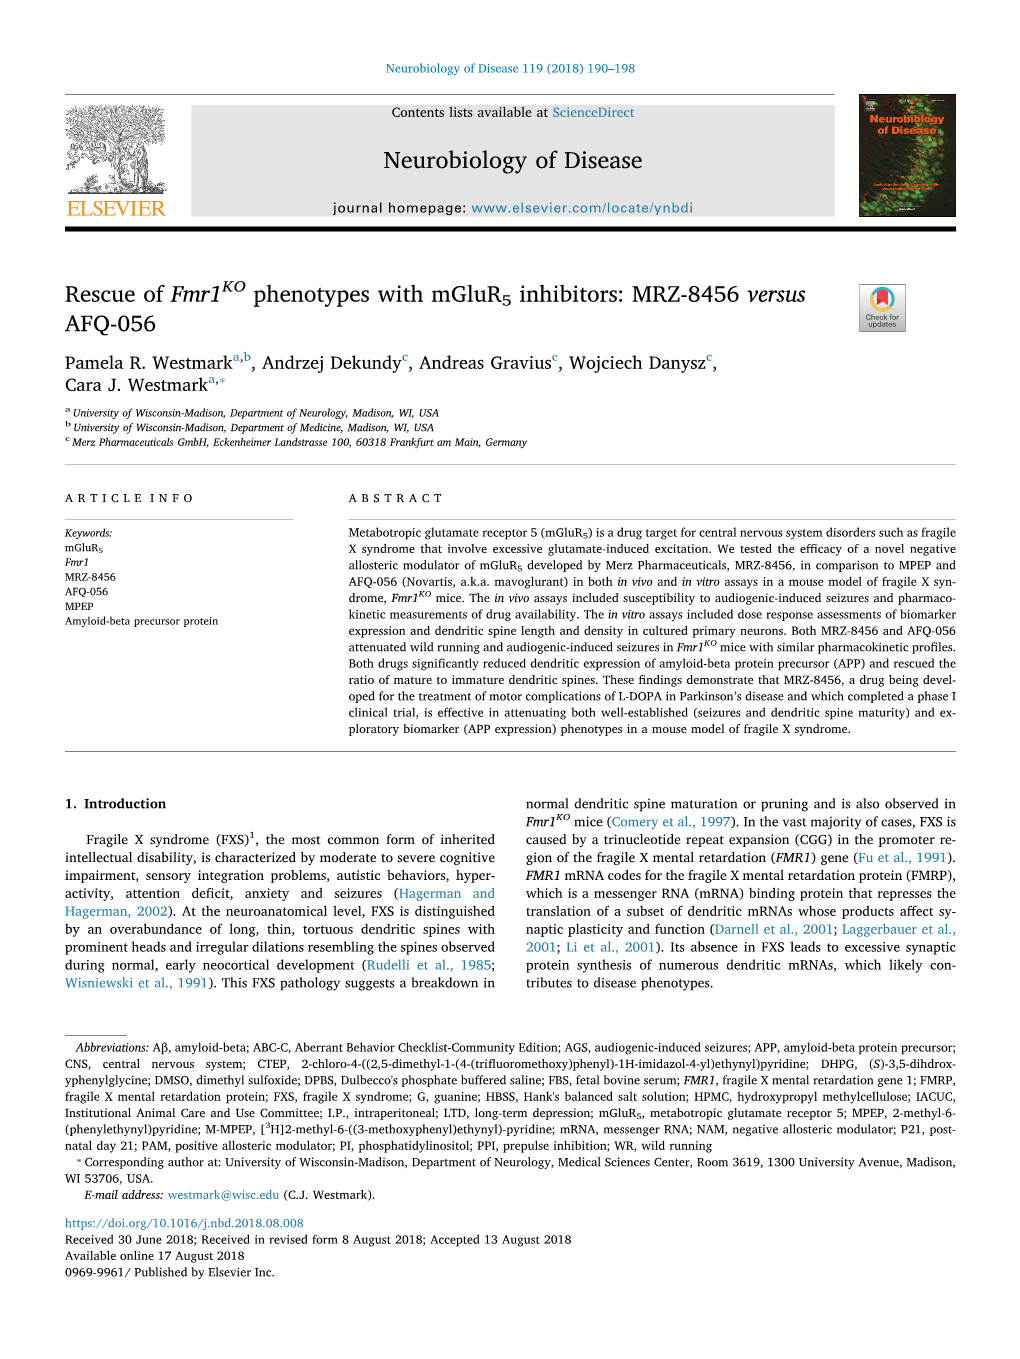 Rescue of Fmr1ko Phenotypes with Mglur5 Inhibitors MRZ-8456